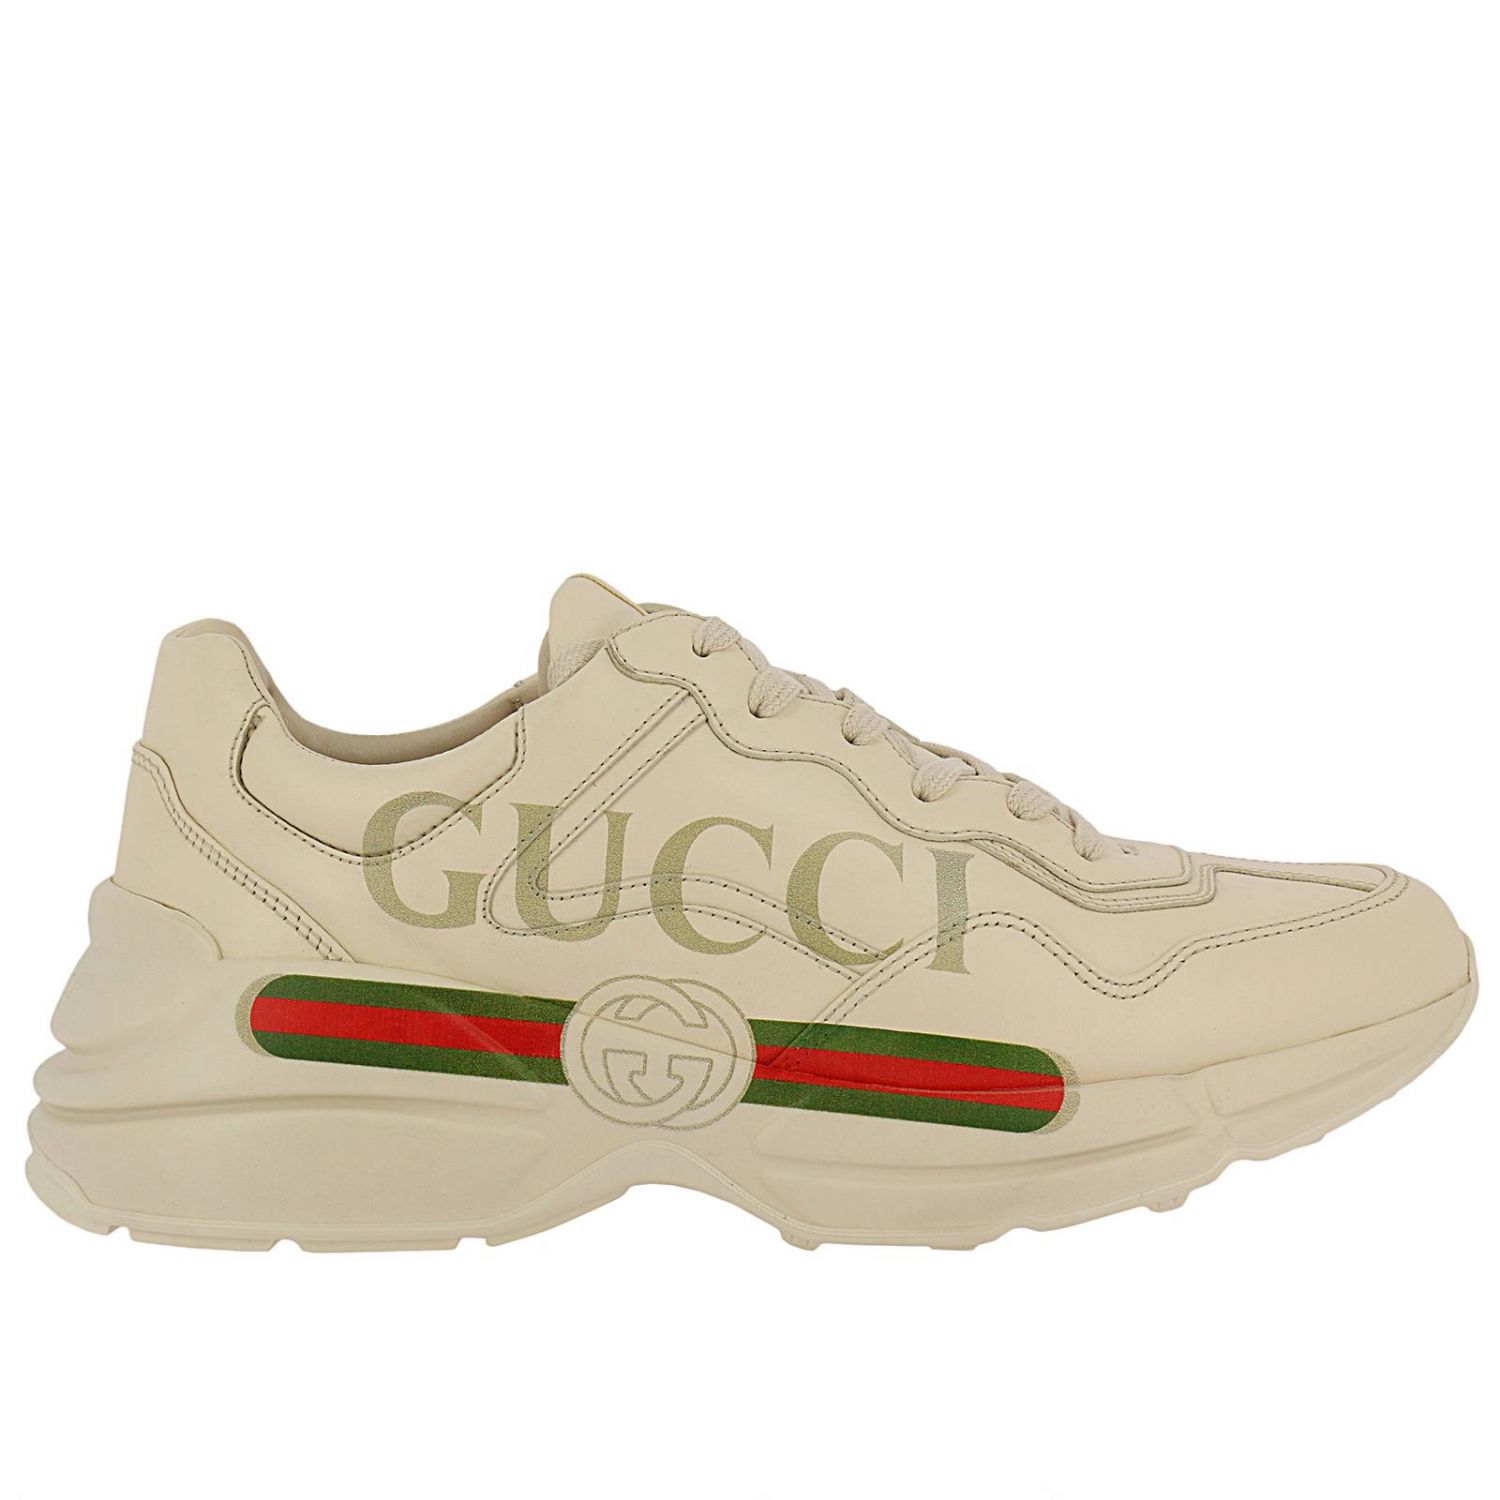 GUCCI: Shoes men | Sneakers Gucci Men White | Sneakers Gucci 500877 ...